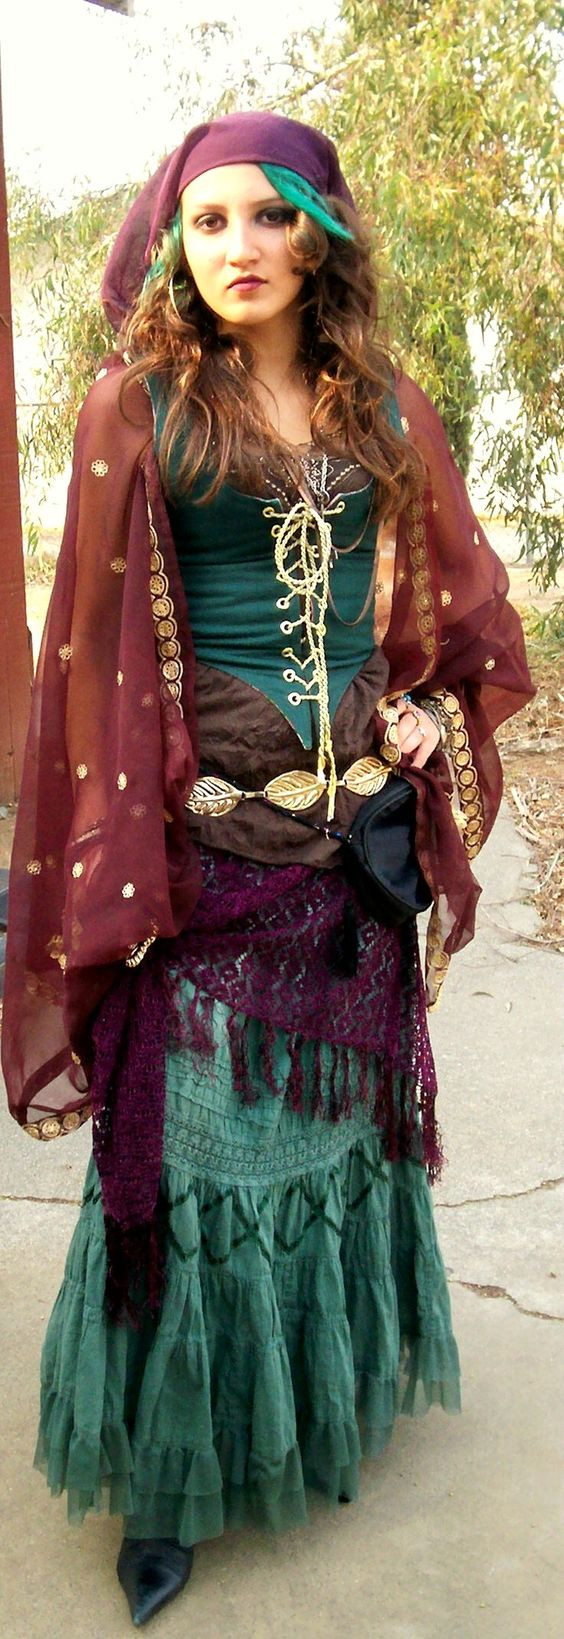 Gypsy Costume DIY
 11 y & Just Plain Cool Corset Halloween Costumes